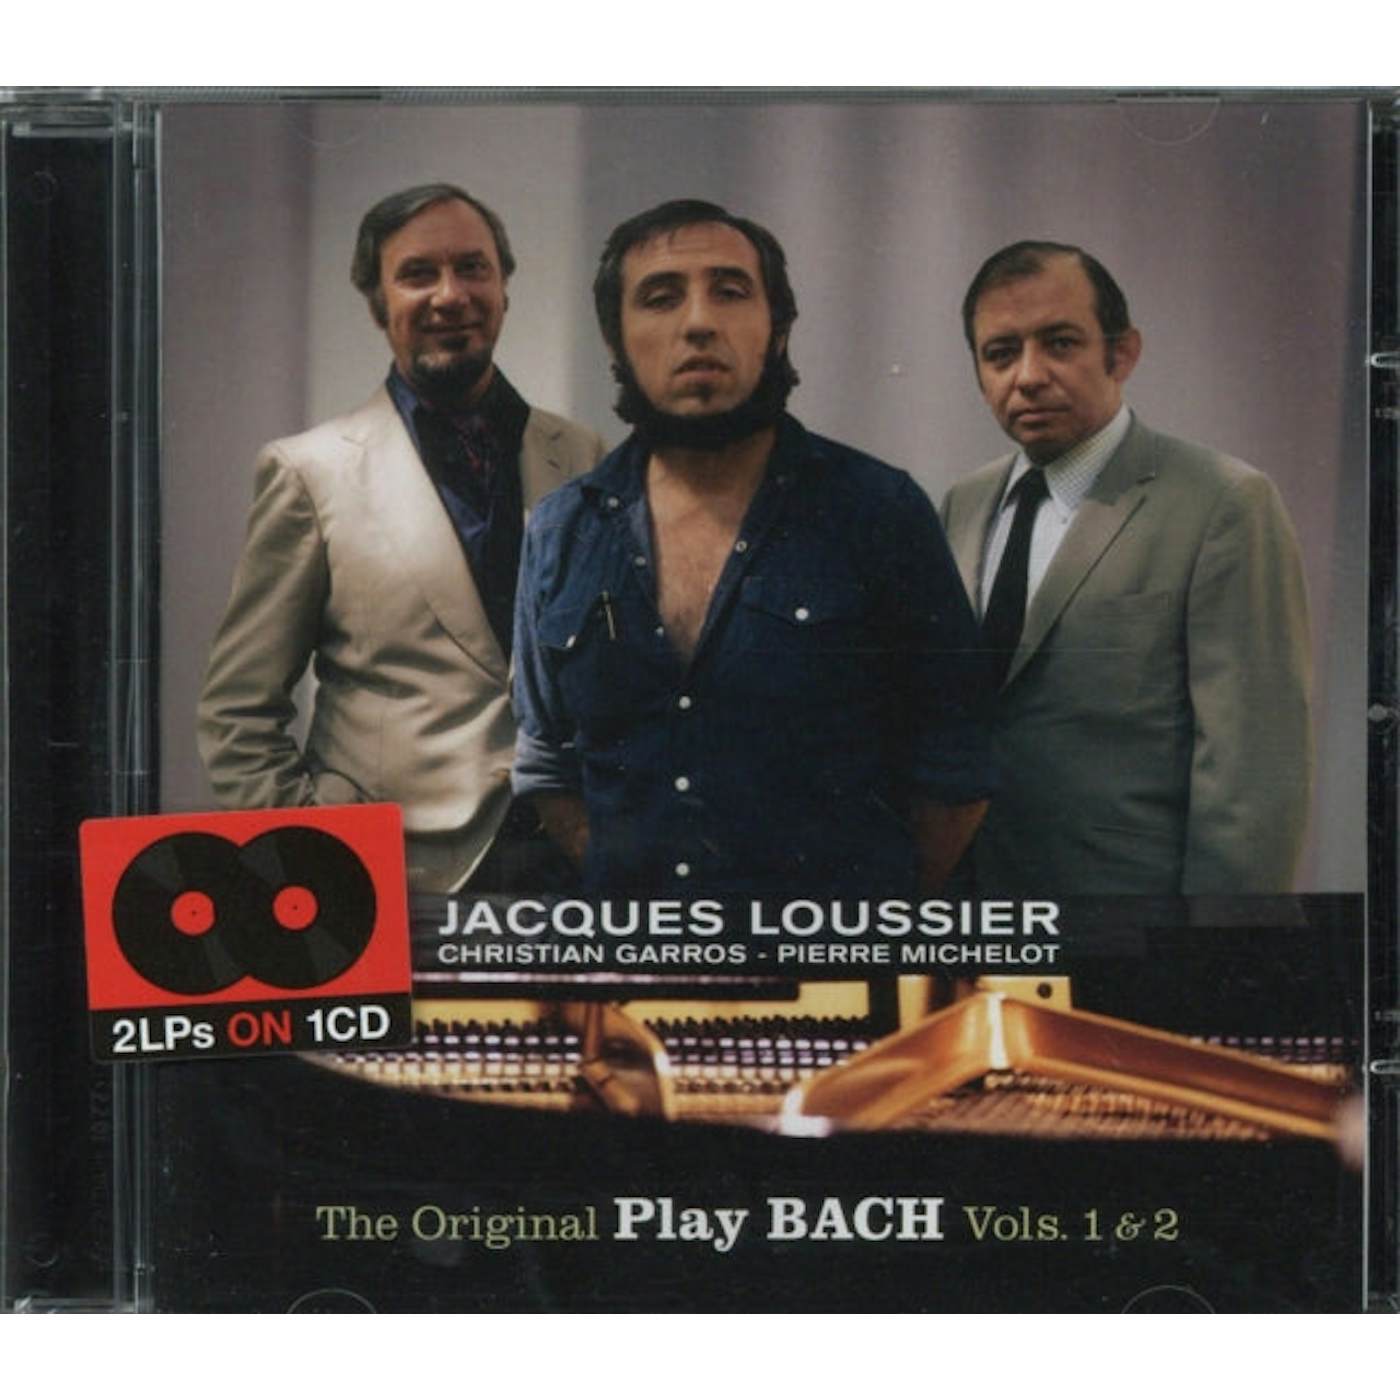 Jacques Loussier CD - The Original Play Bach Vols. 1 & 2